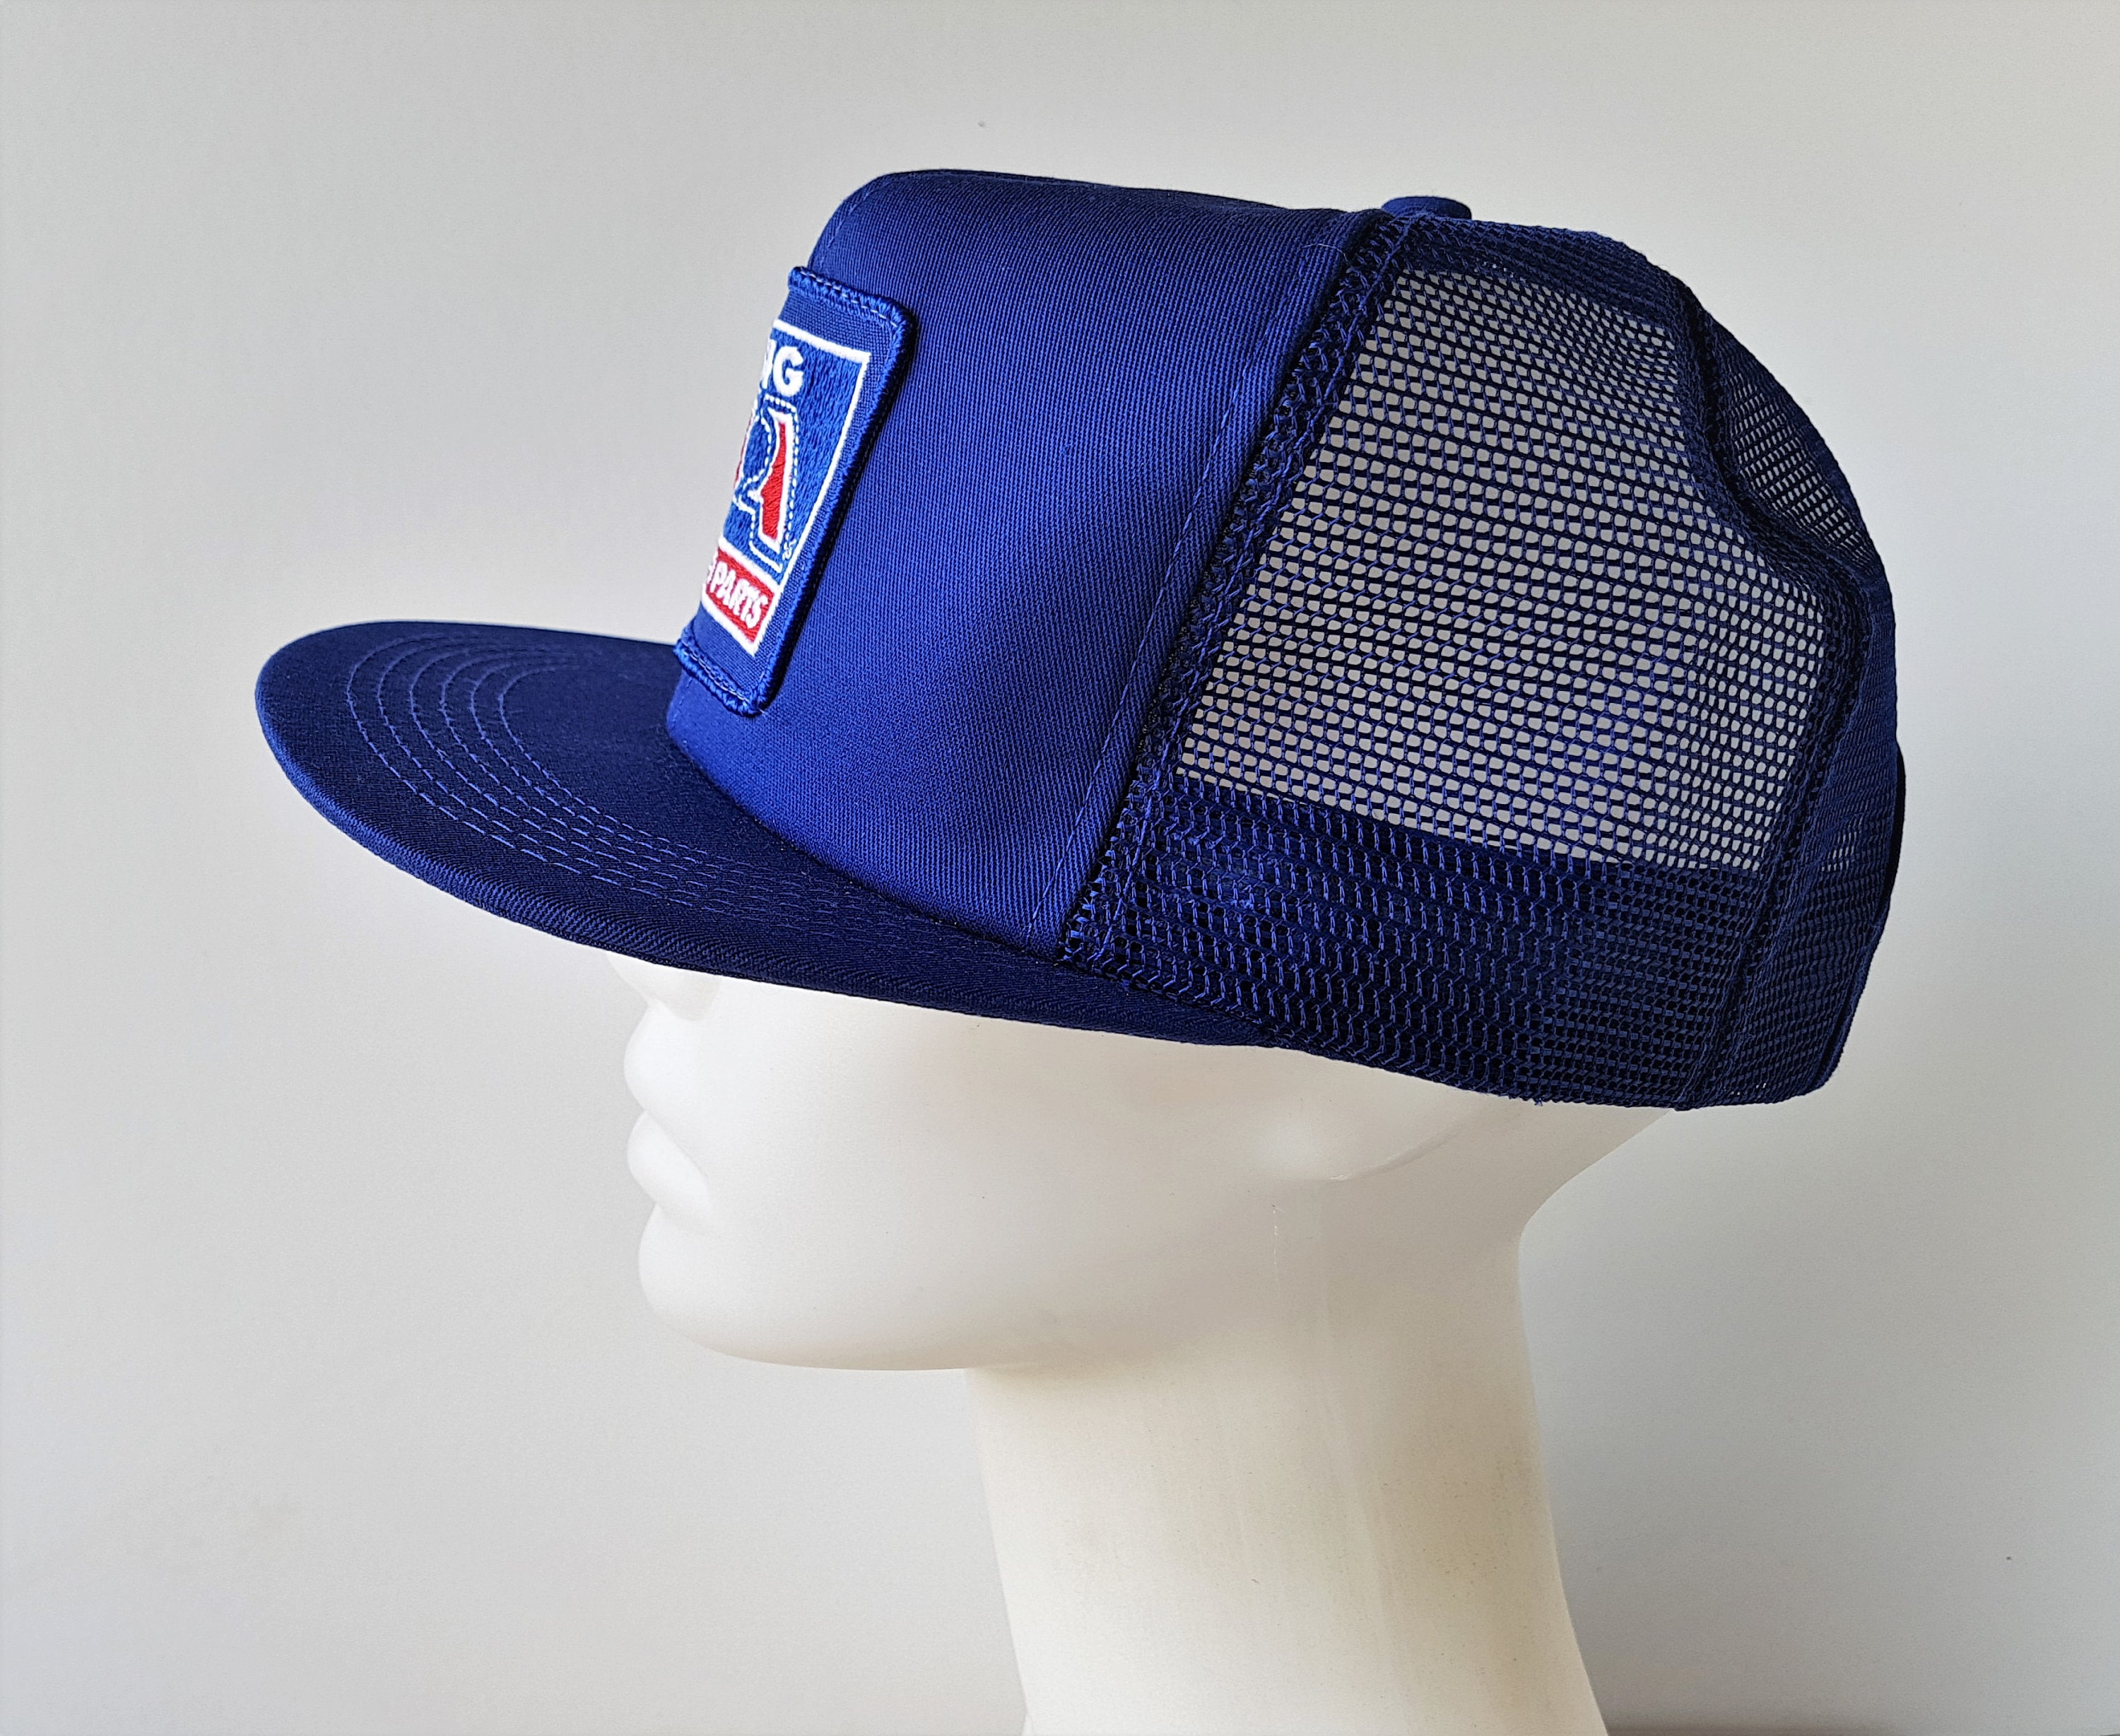 Lot of 10 Vintage Snapback Hats Caps K Products See Description